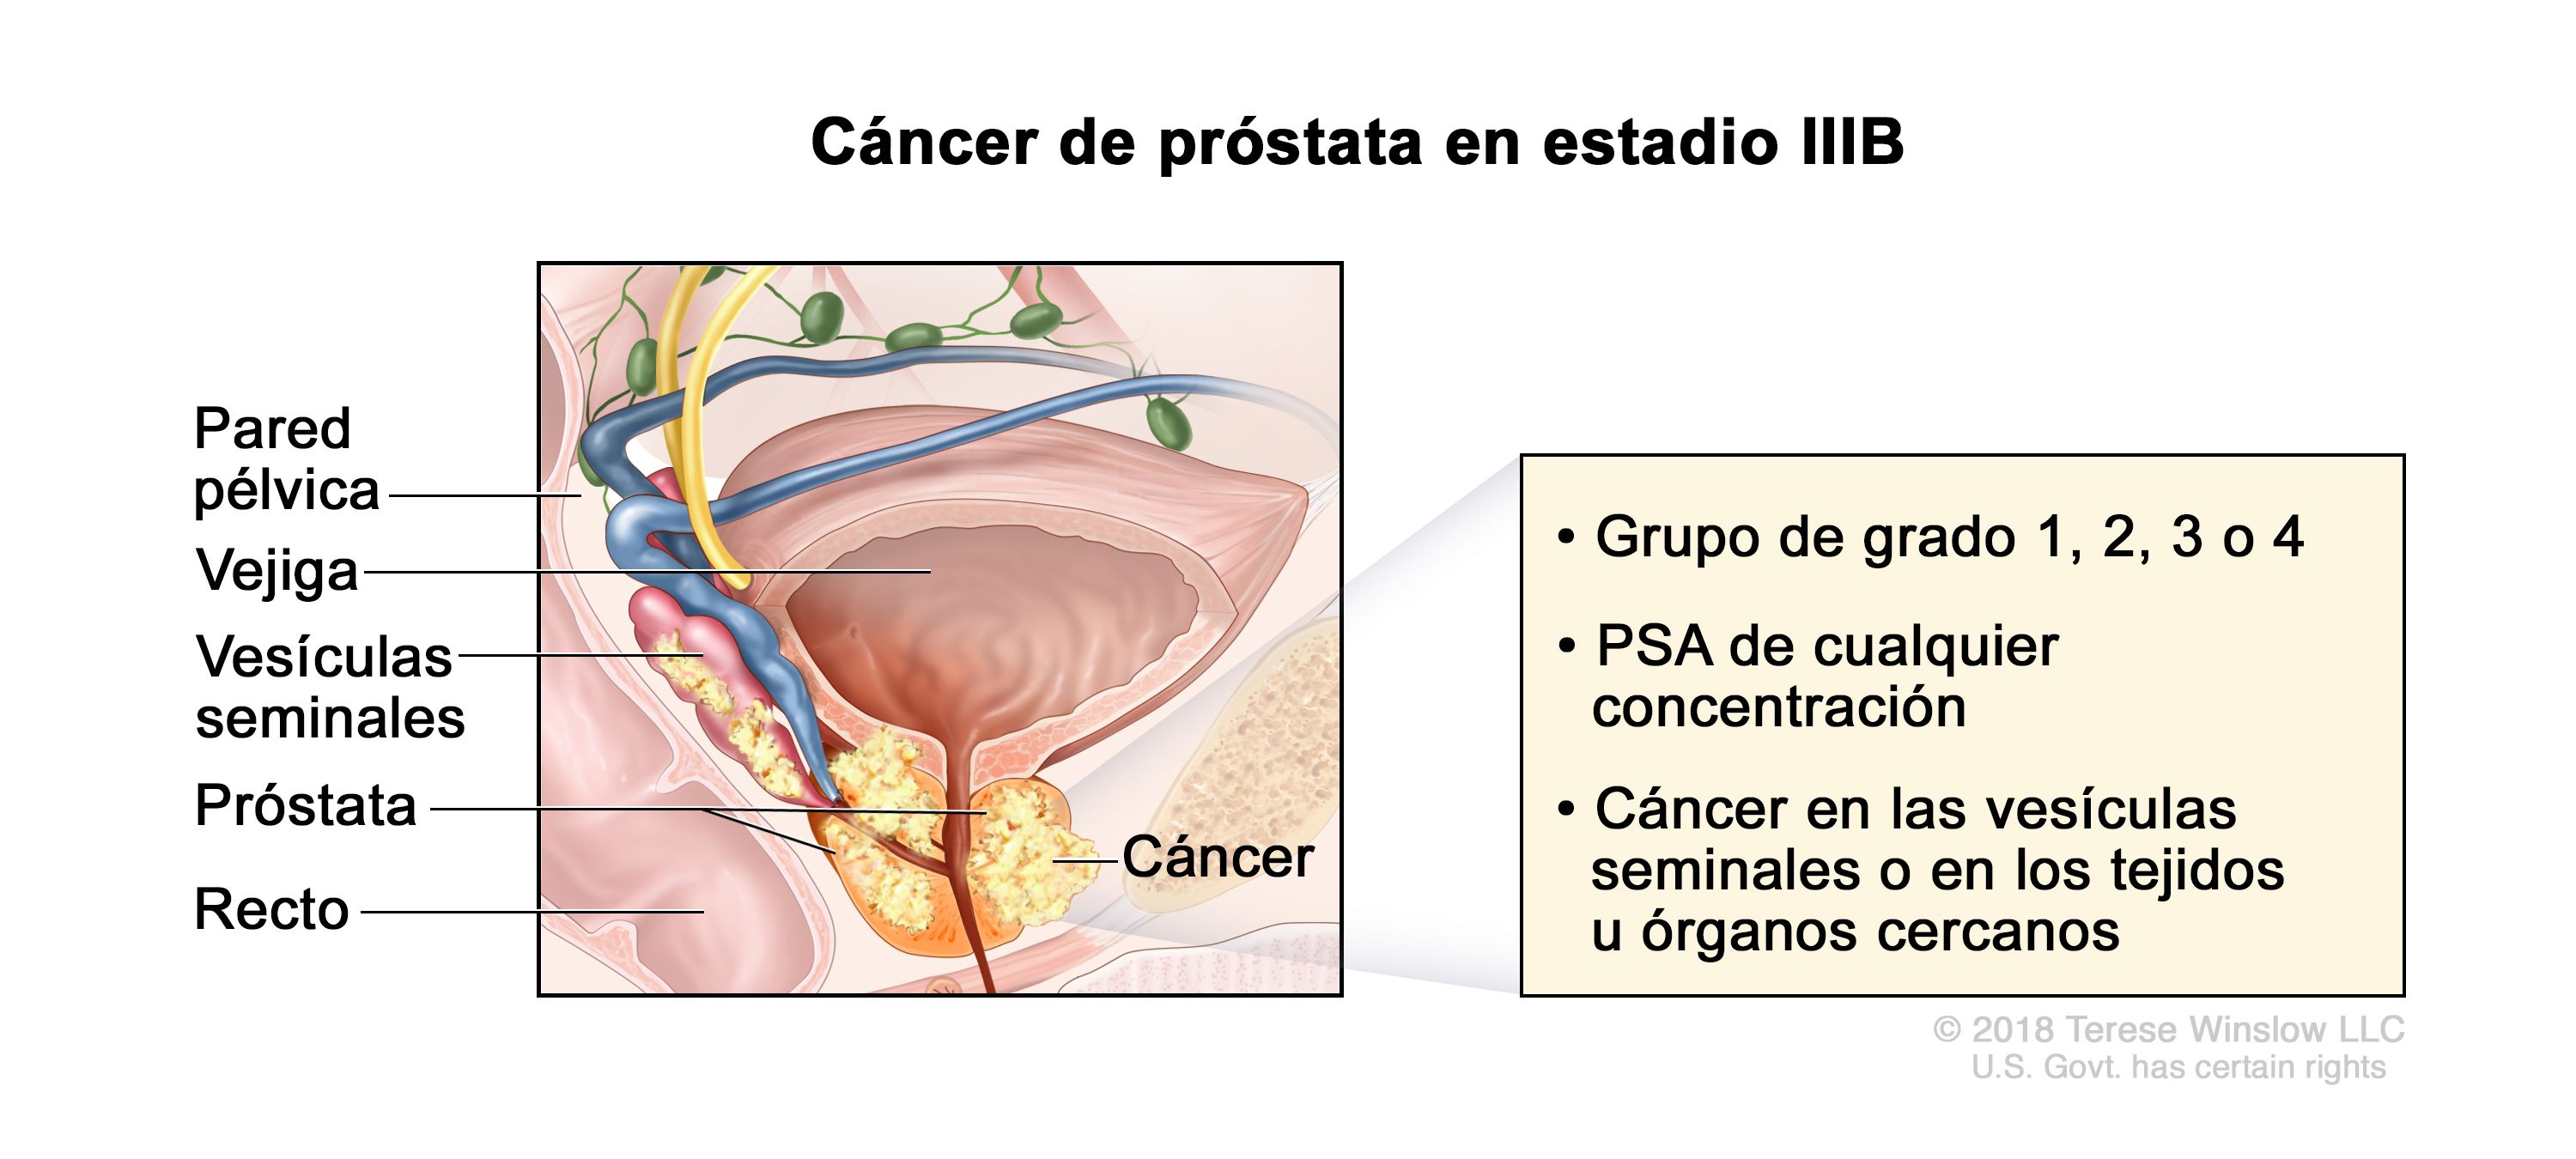 cancer de prostata etapa 6)